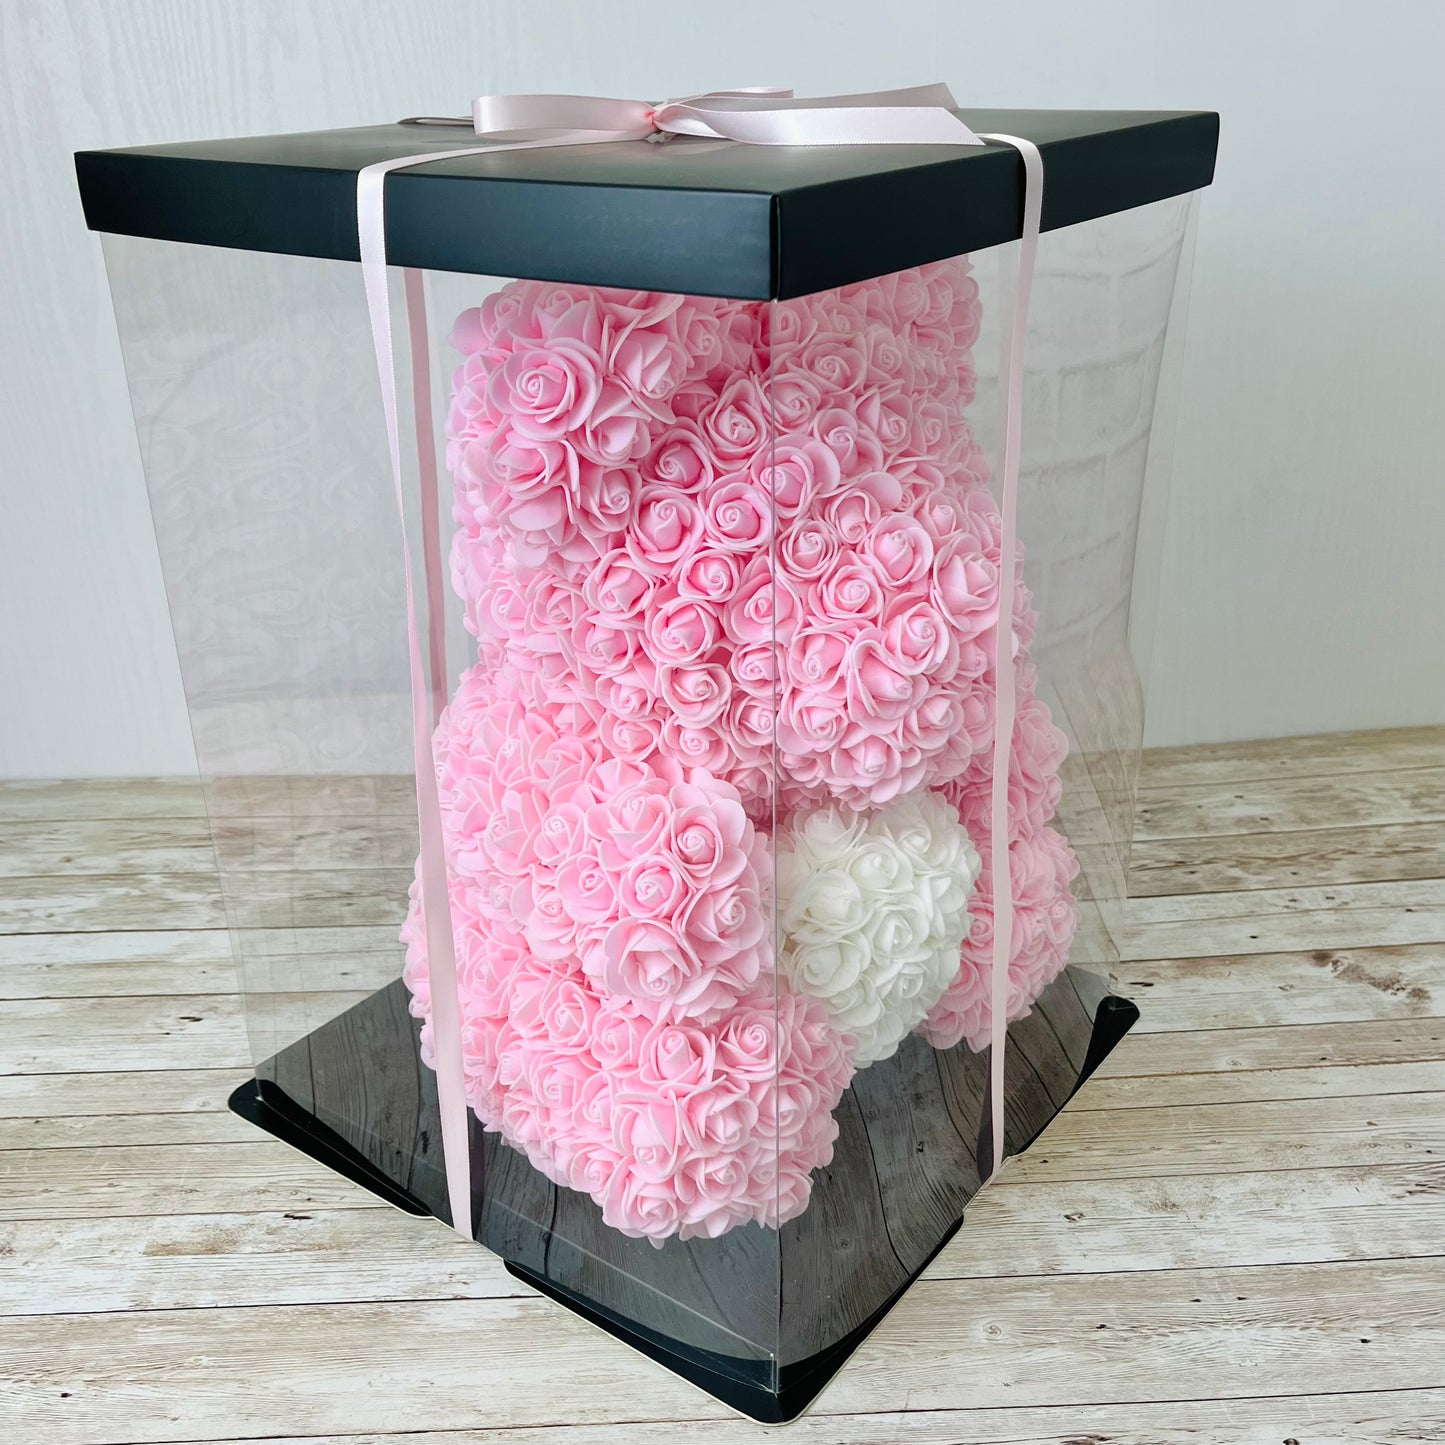 Rose Bear - Forever Pink Rose Teddy Bears - Gift Boxed Bears- side view